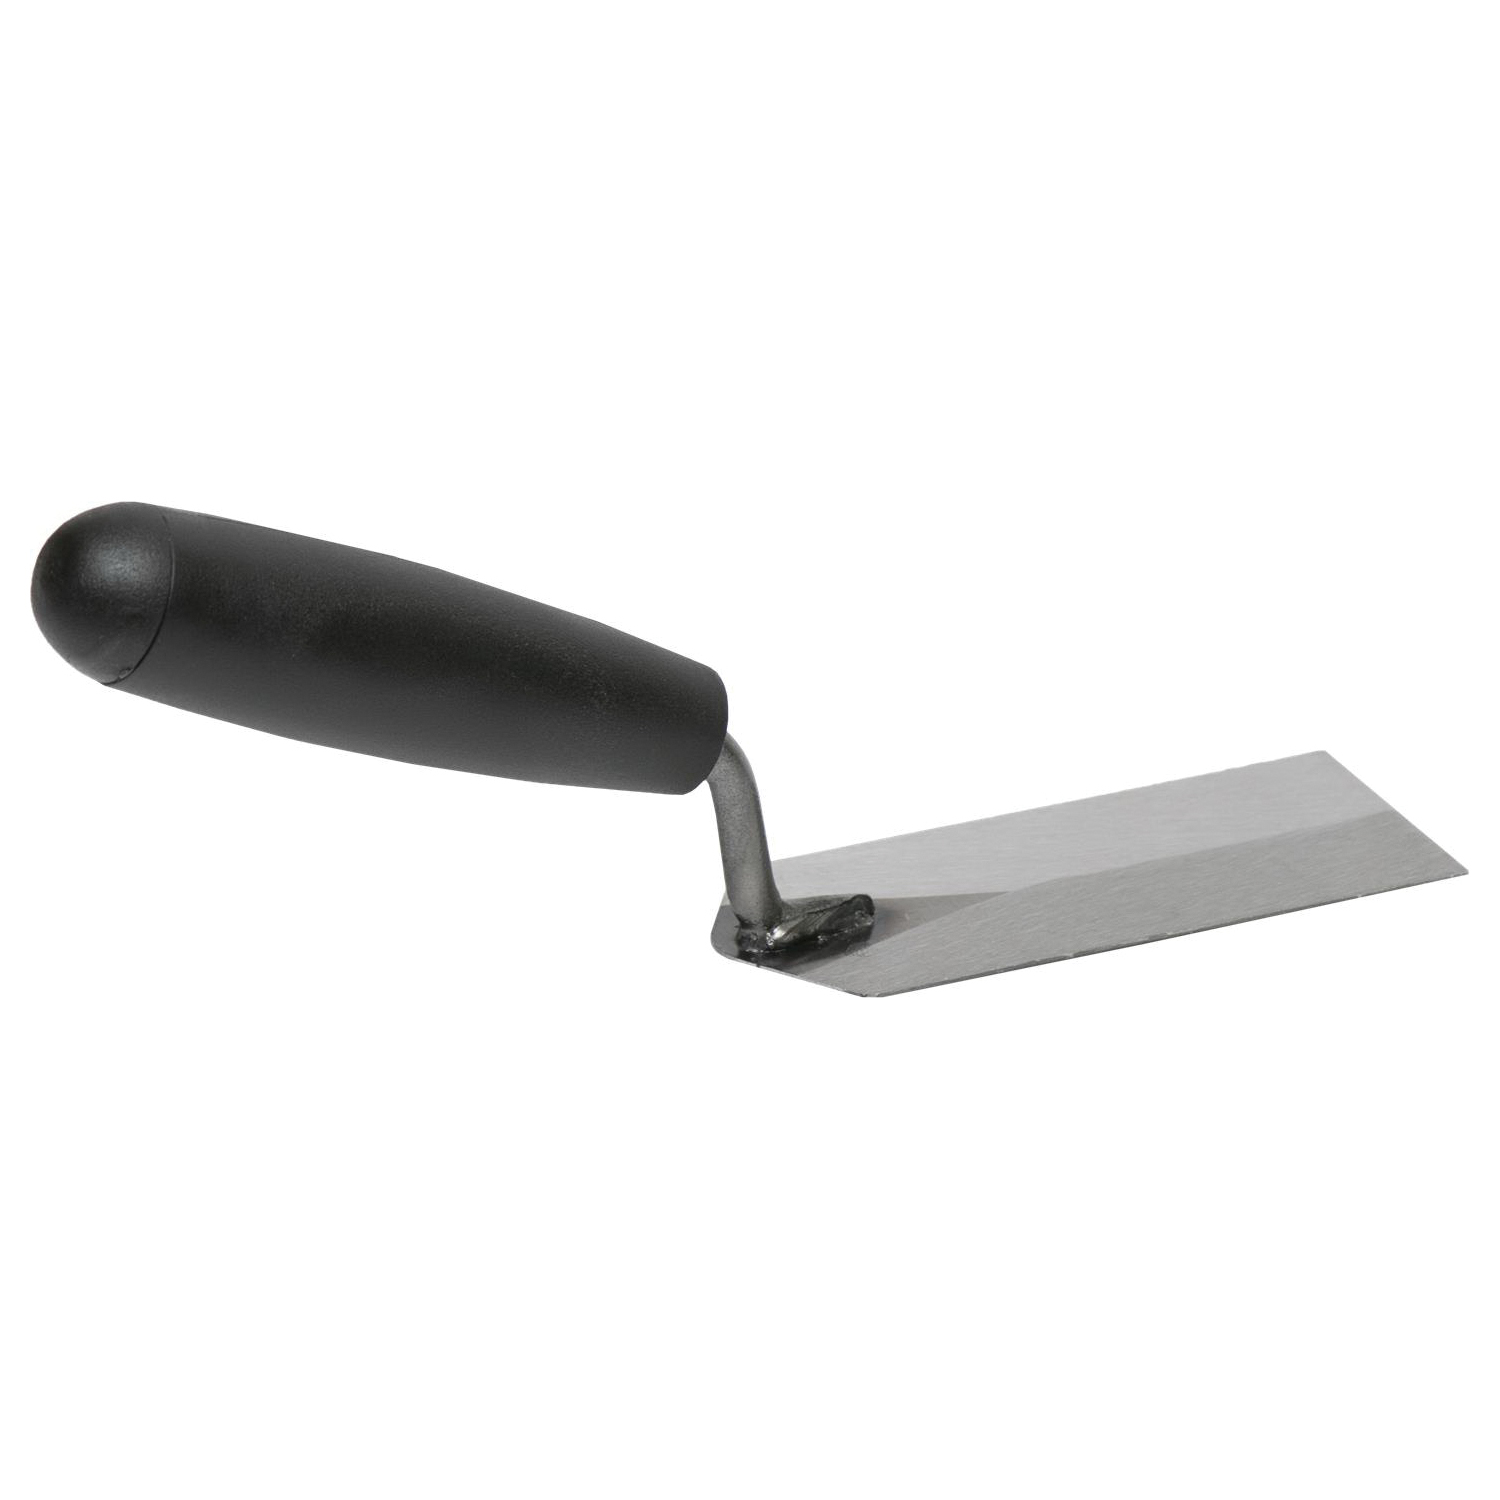 QLT MT45 Margin Trowel, Carbon Steel Blade, Plastic Handle - 4